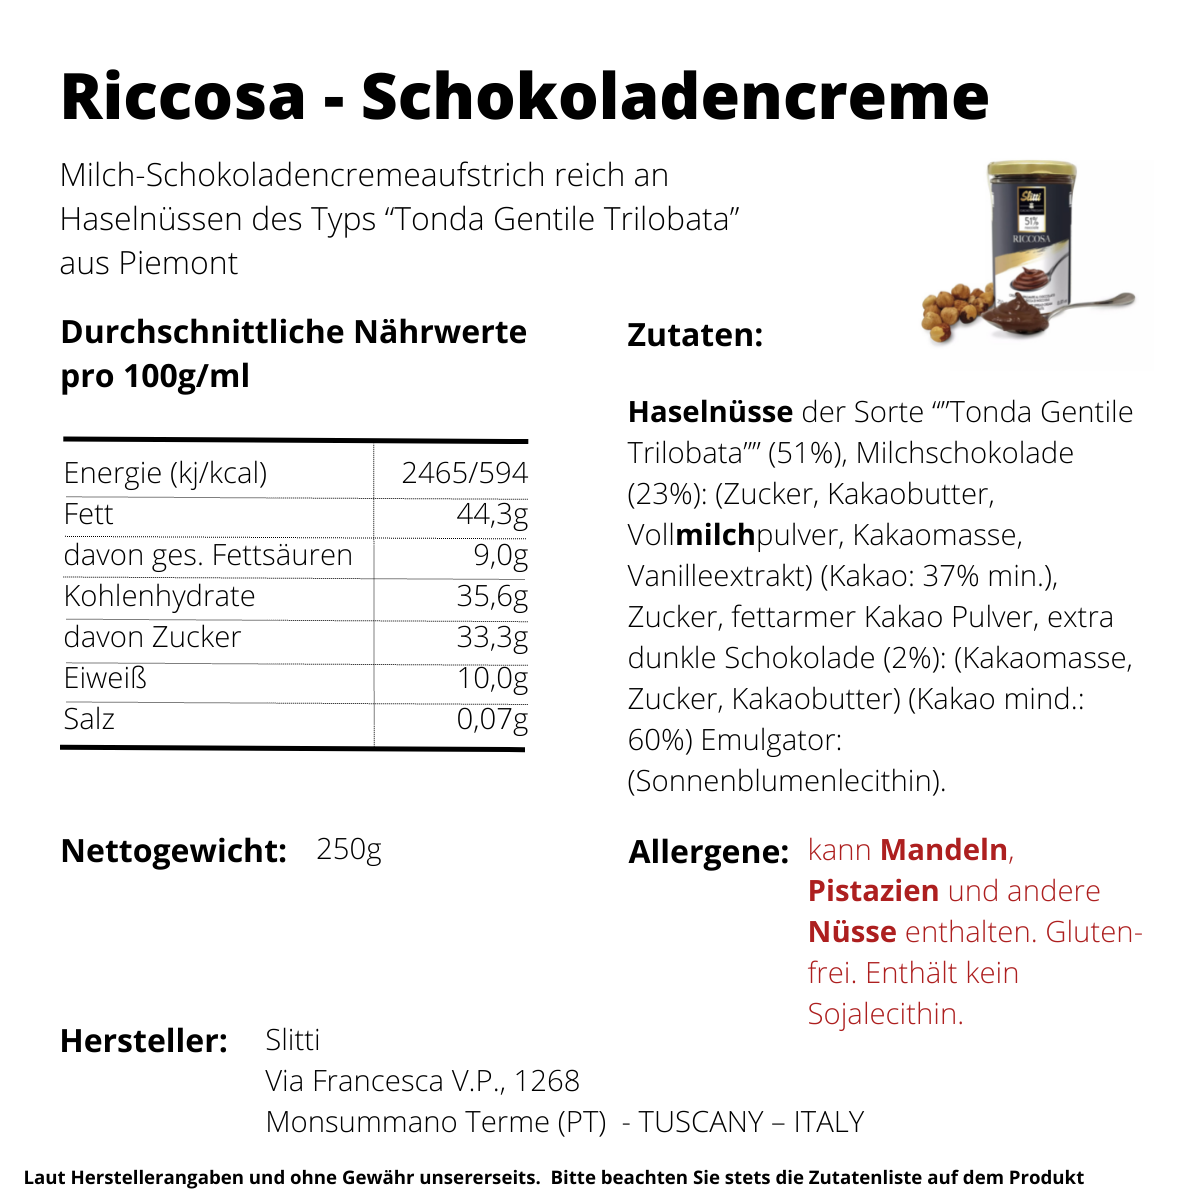 Slitti Riccosa Aktion 6er Pack - Mehrfach preisgekrönte Haselnuss-Schokocreme - 1500g